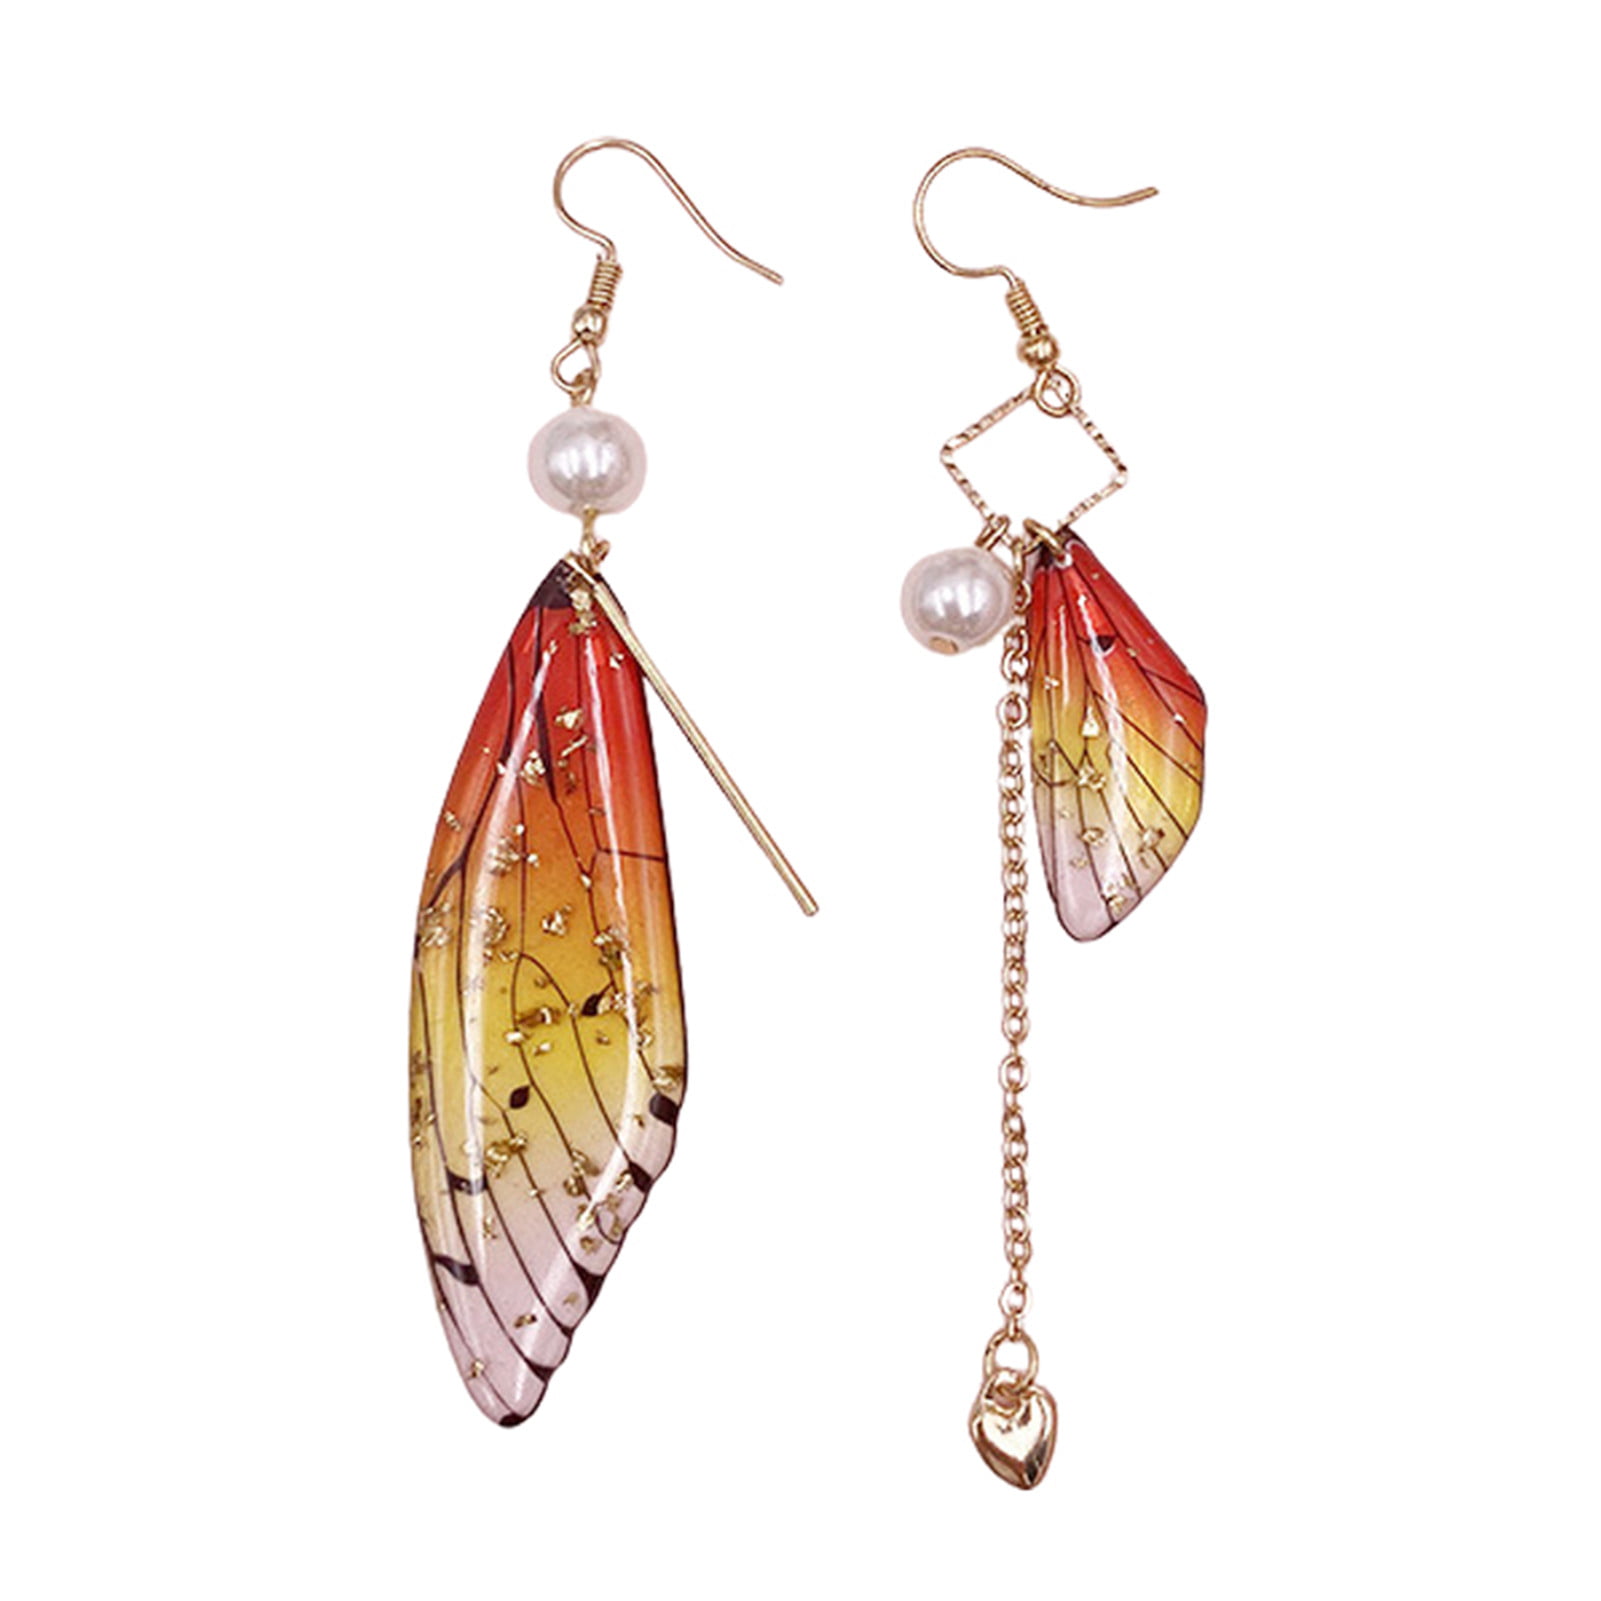 Vibrant hypoallergenic jewelry versatile designs handcrafted Dangling Resin Earrings Lightweight Glittering Drops